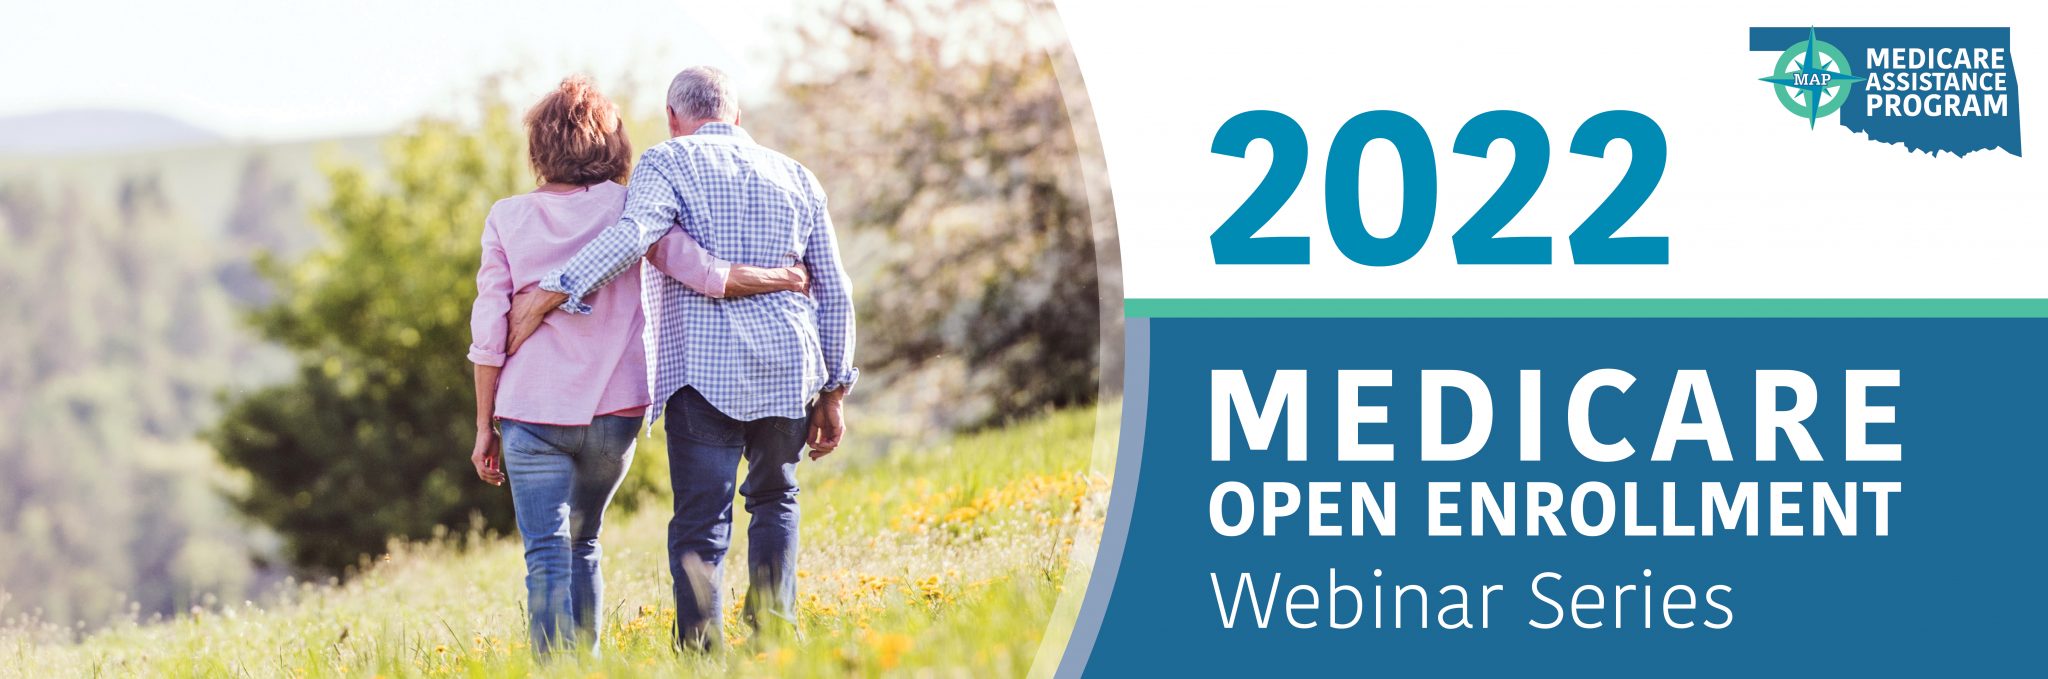 2022 Medicare Open Enrollment Webinar Series